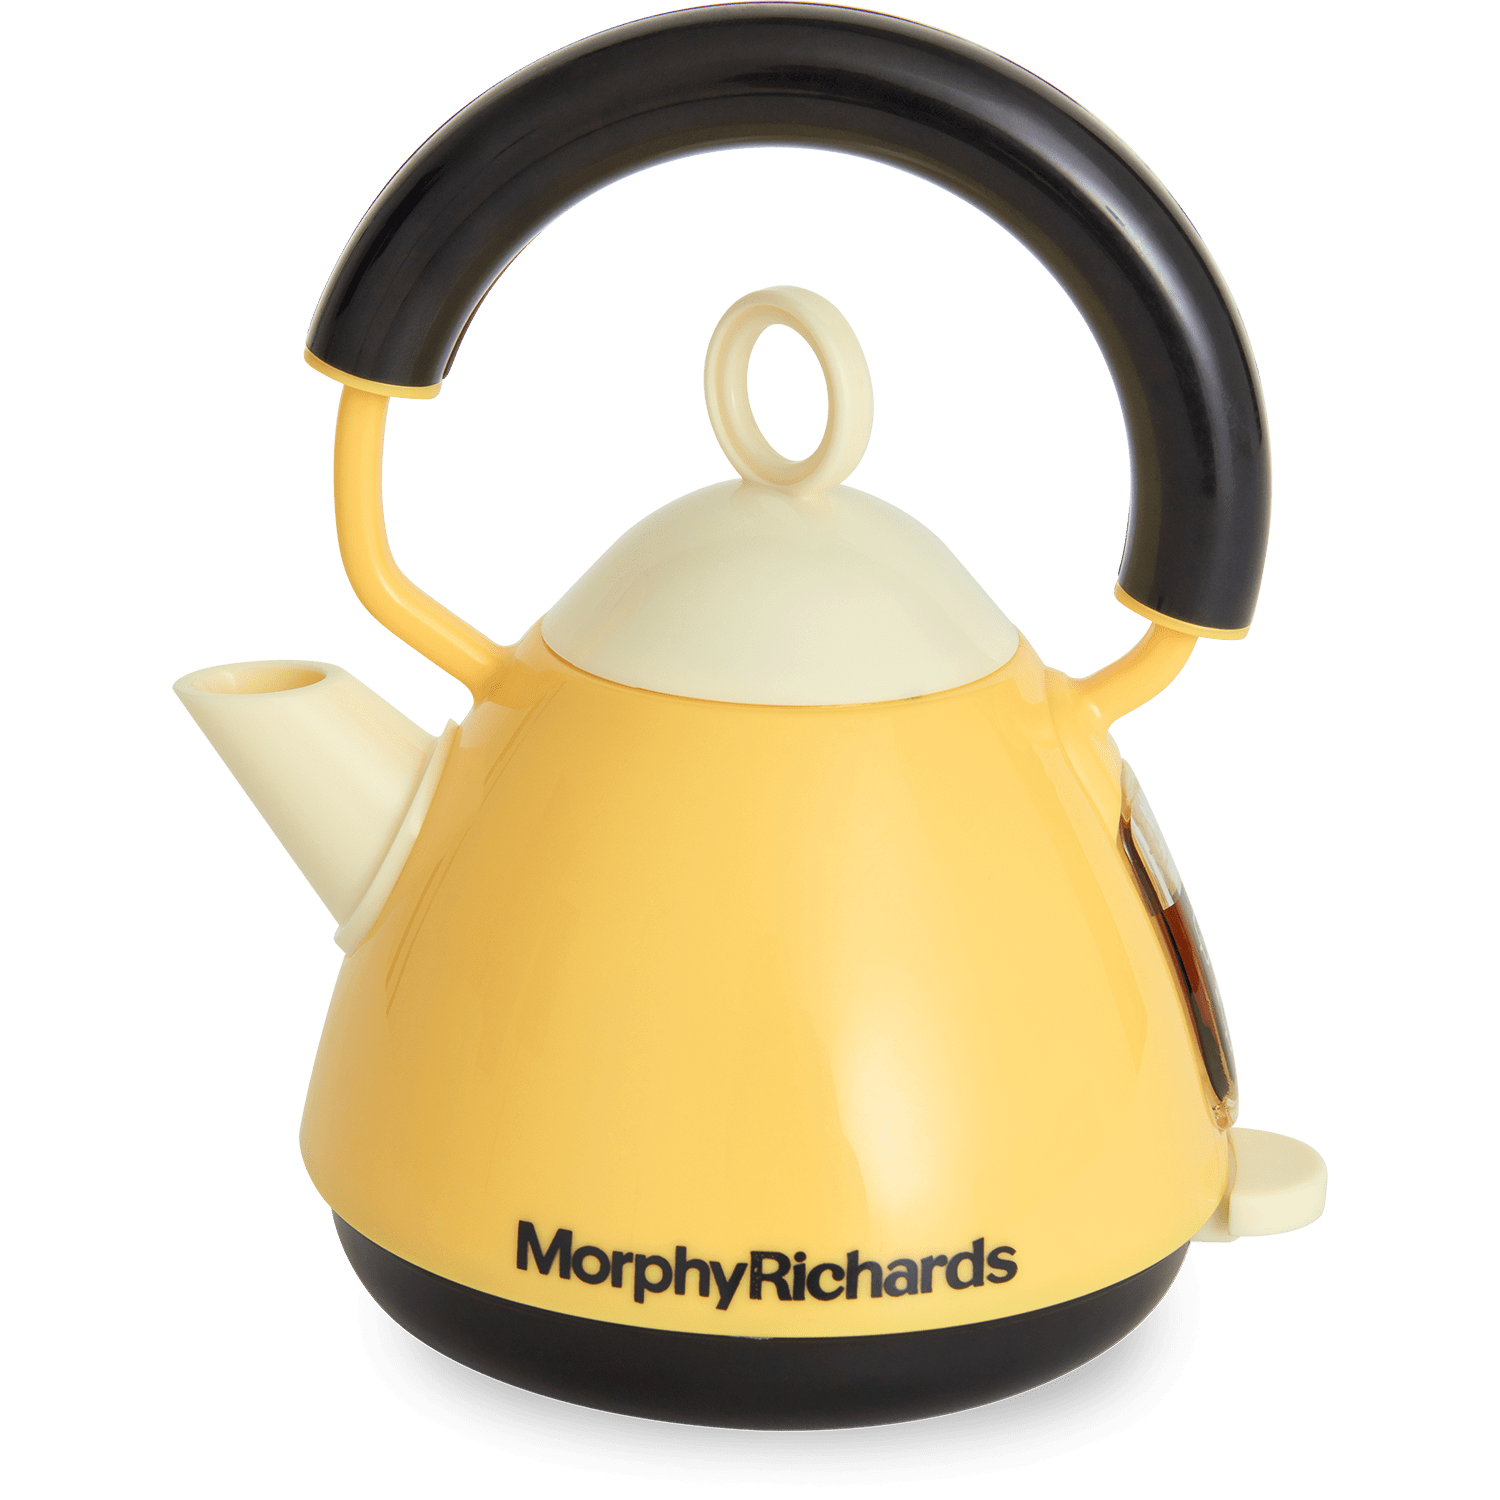 morphy richards kettle - Casdon